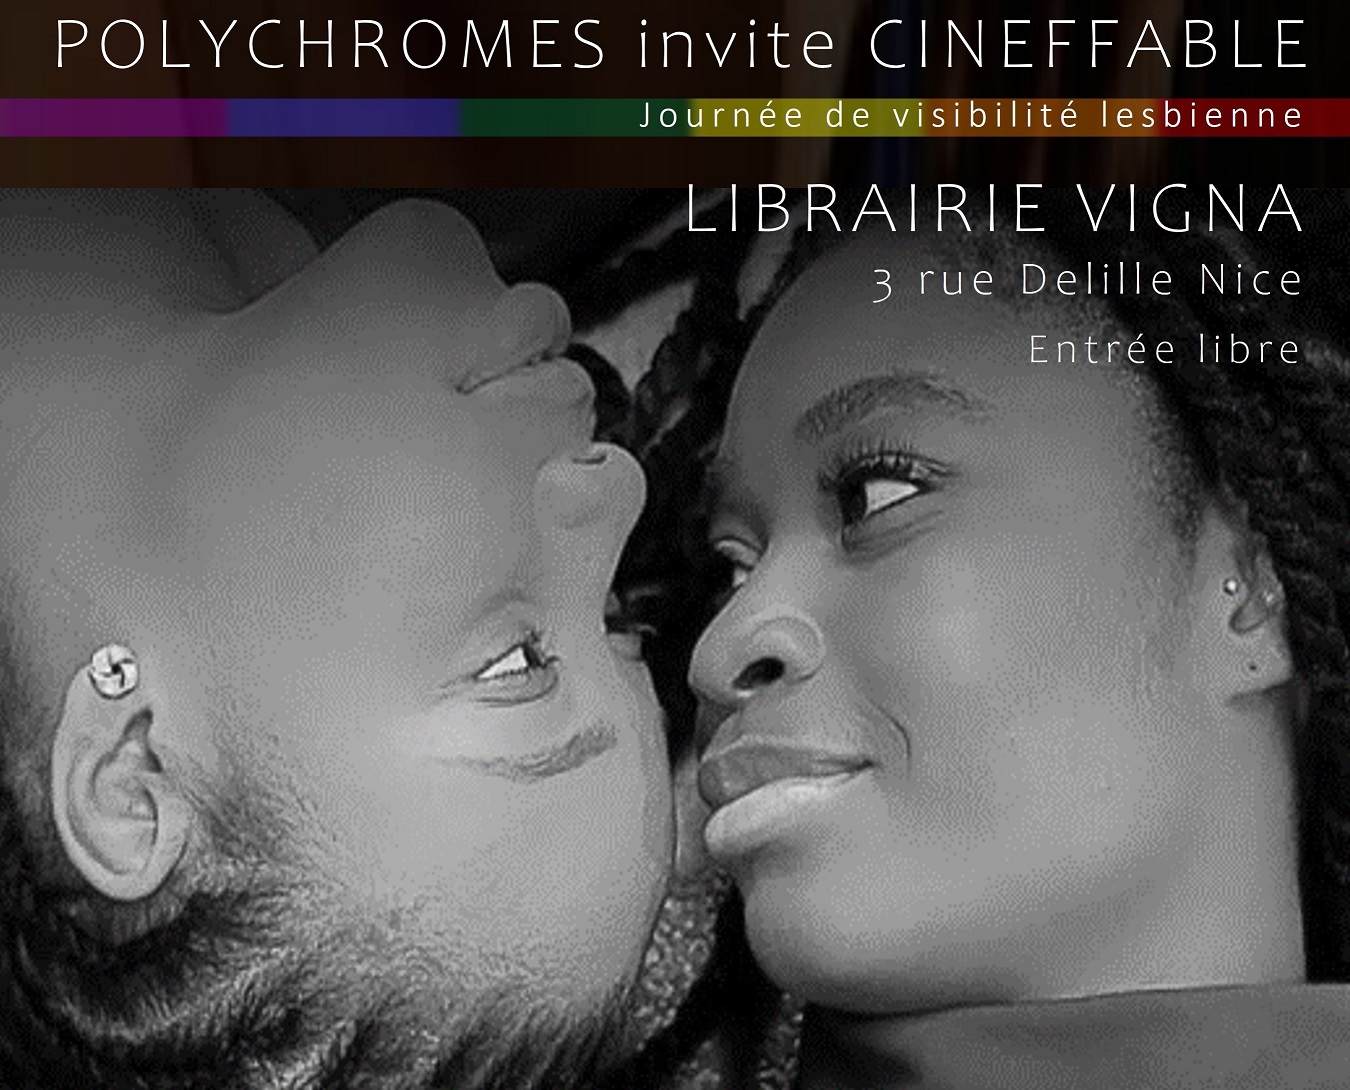 Polychromes invite Cineffable